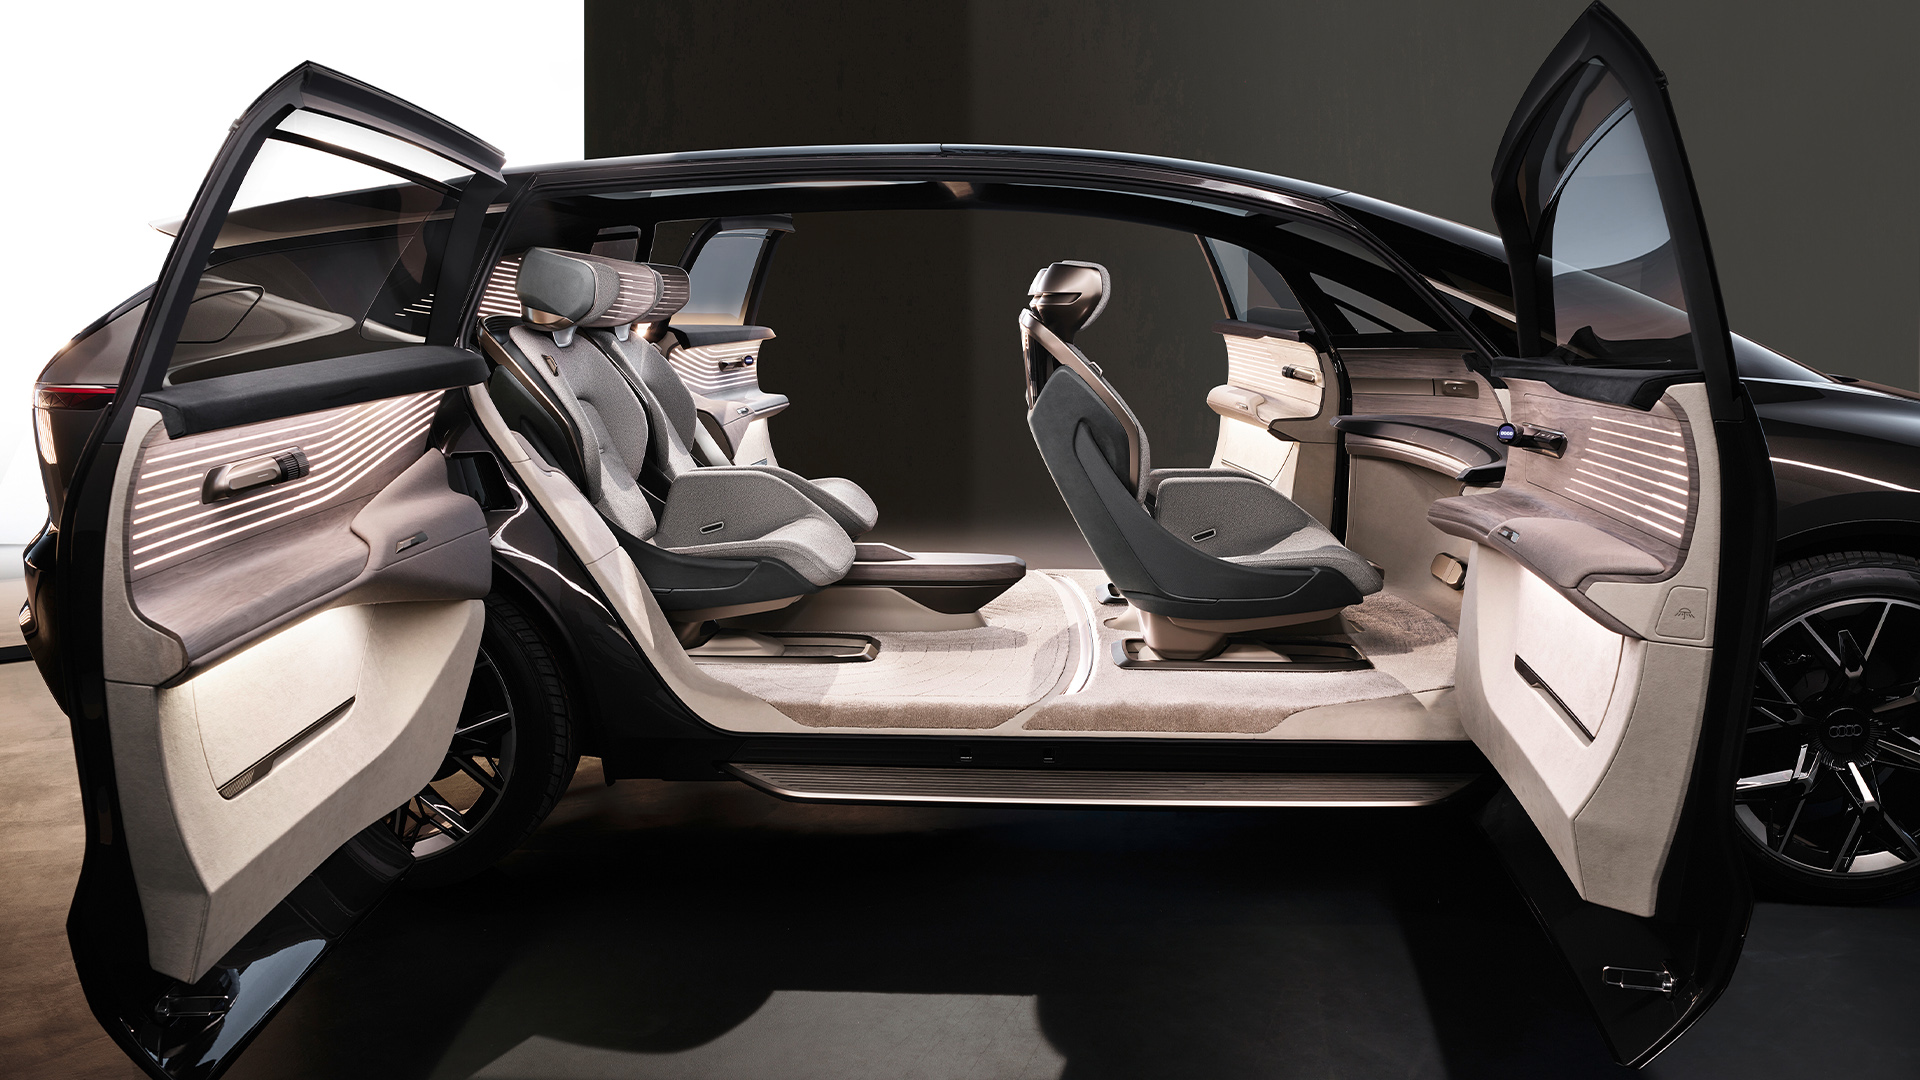 The future of progressive premium mobility > Stories of Progress > Audi